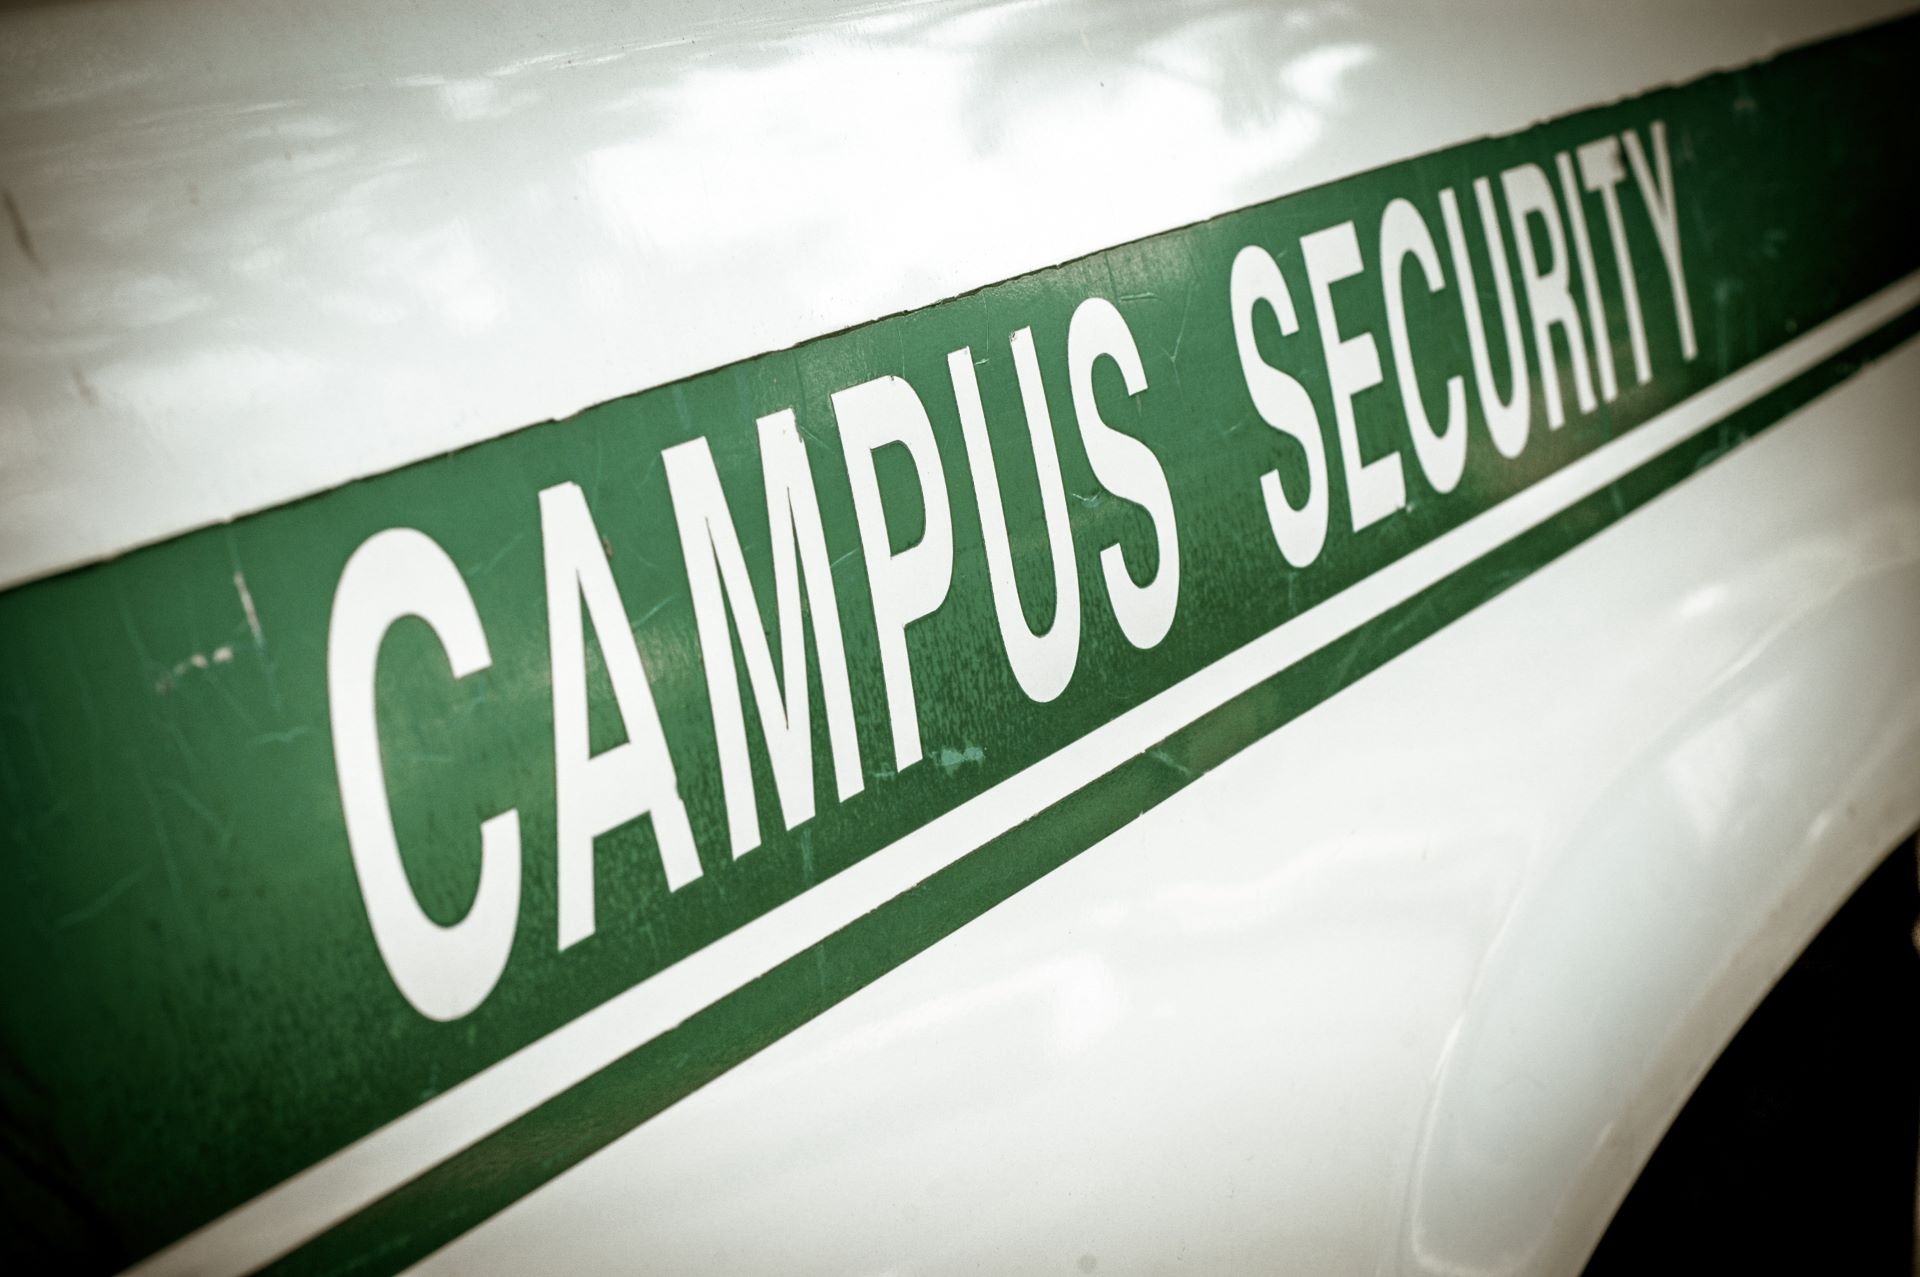 campus security vehicle